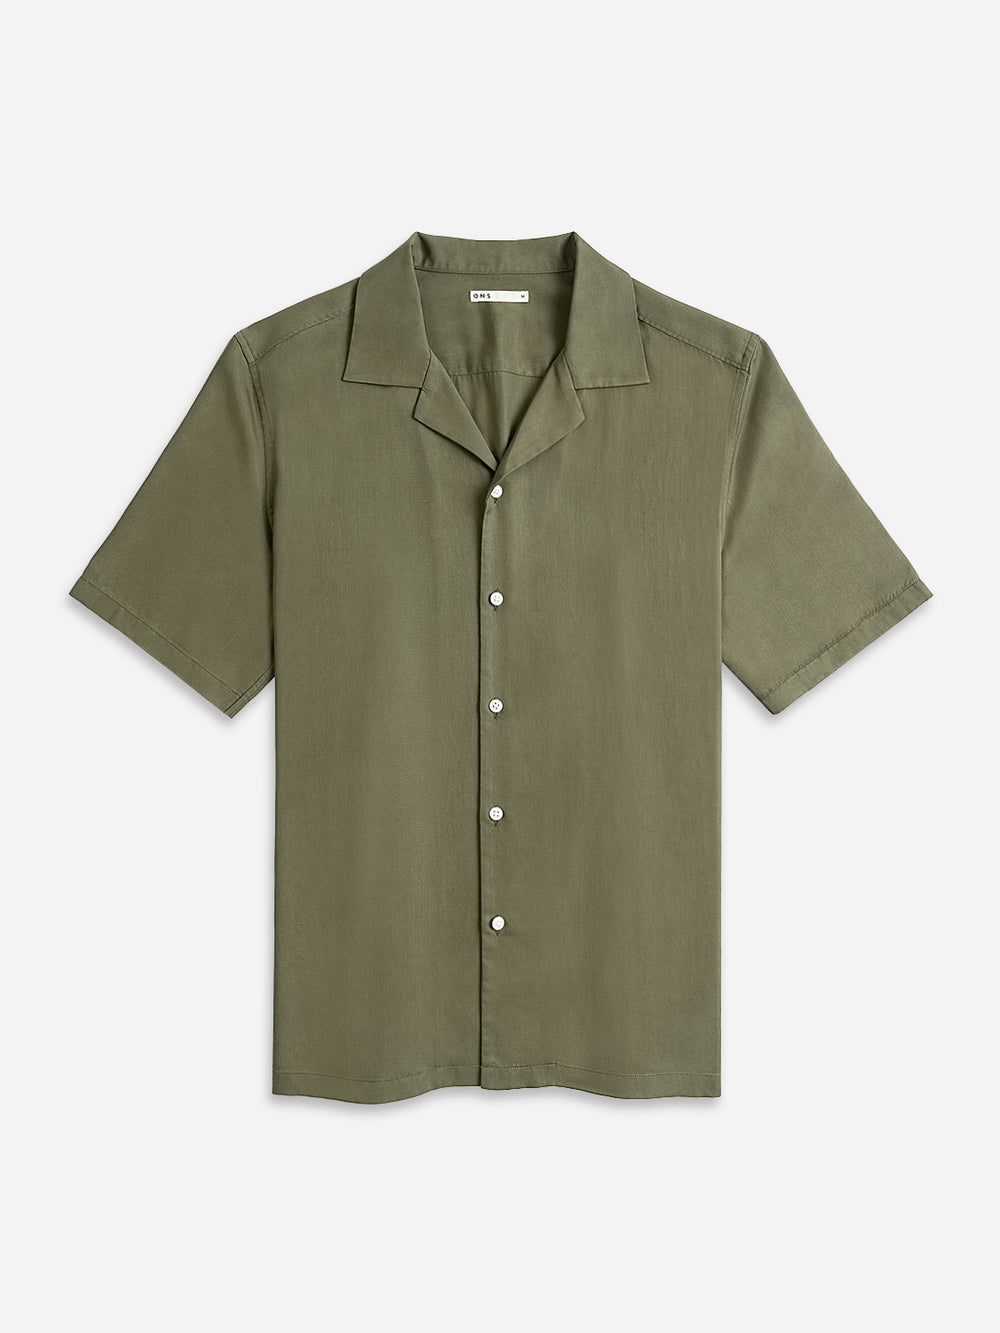 Olive H Rockaway Tencel Shirt Men's O.N.S SS23